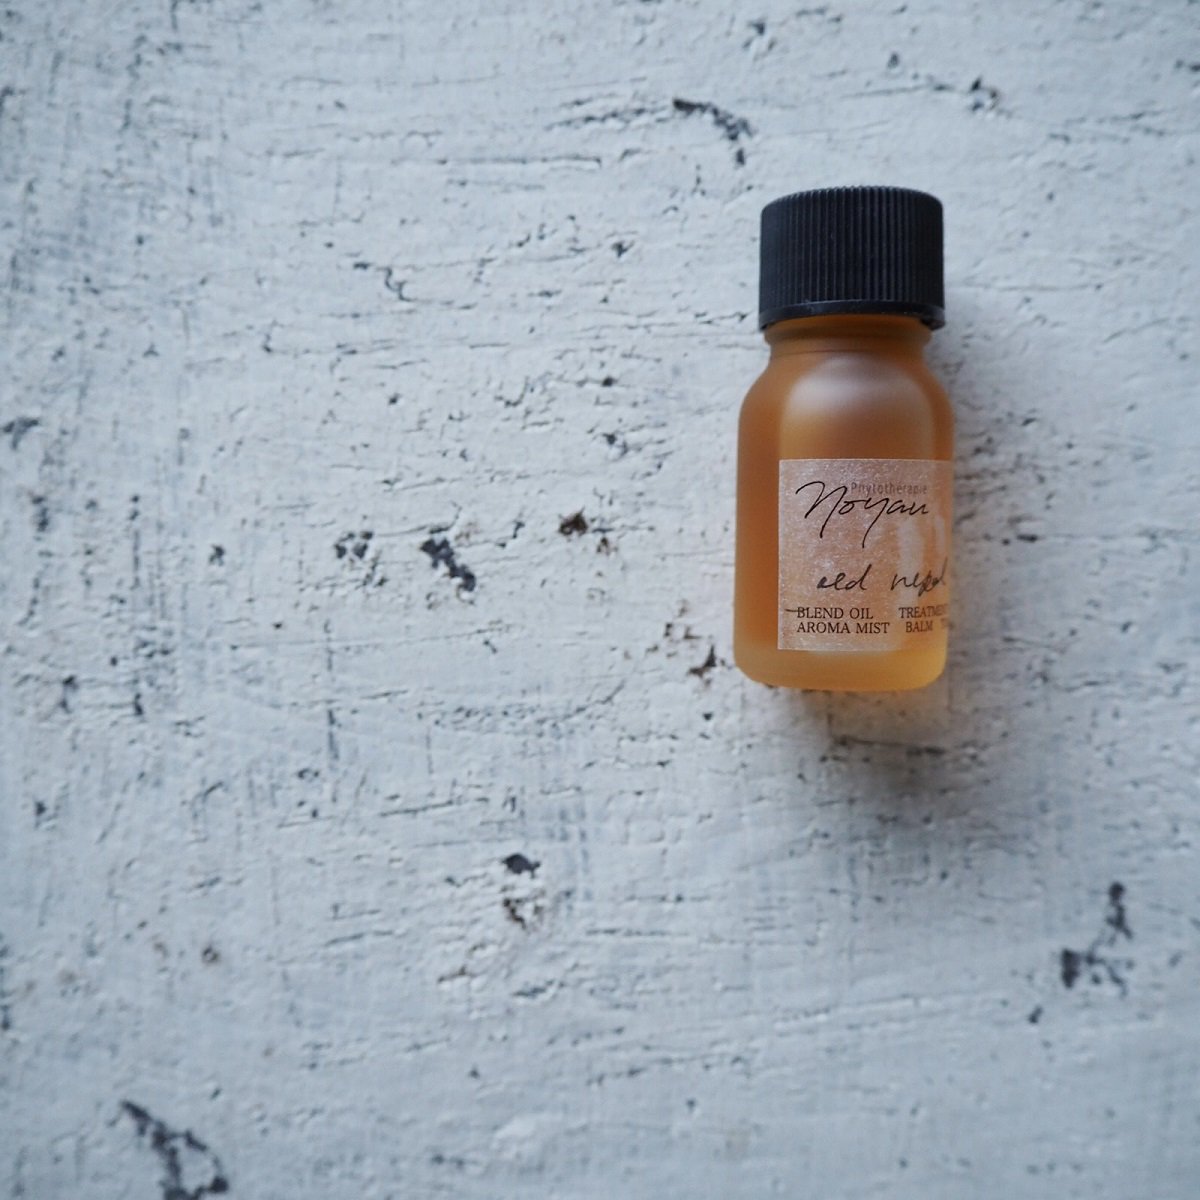 sunya - spice aroma oil / スパイスアロマオイル